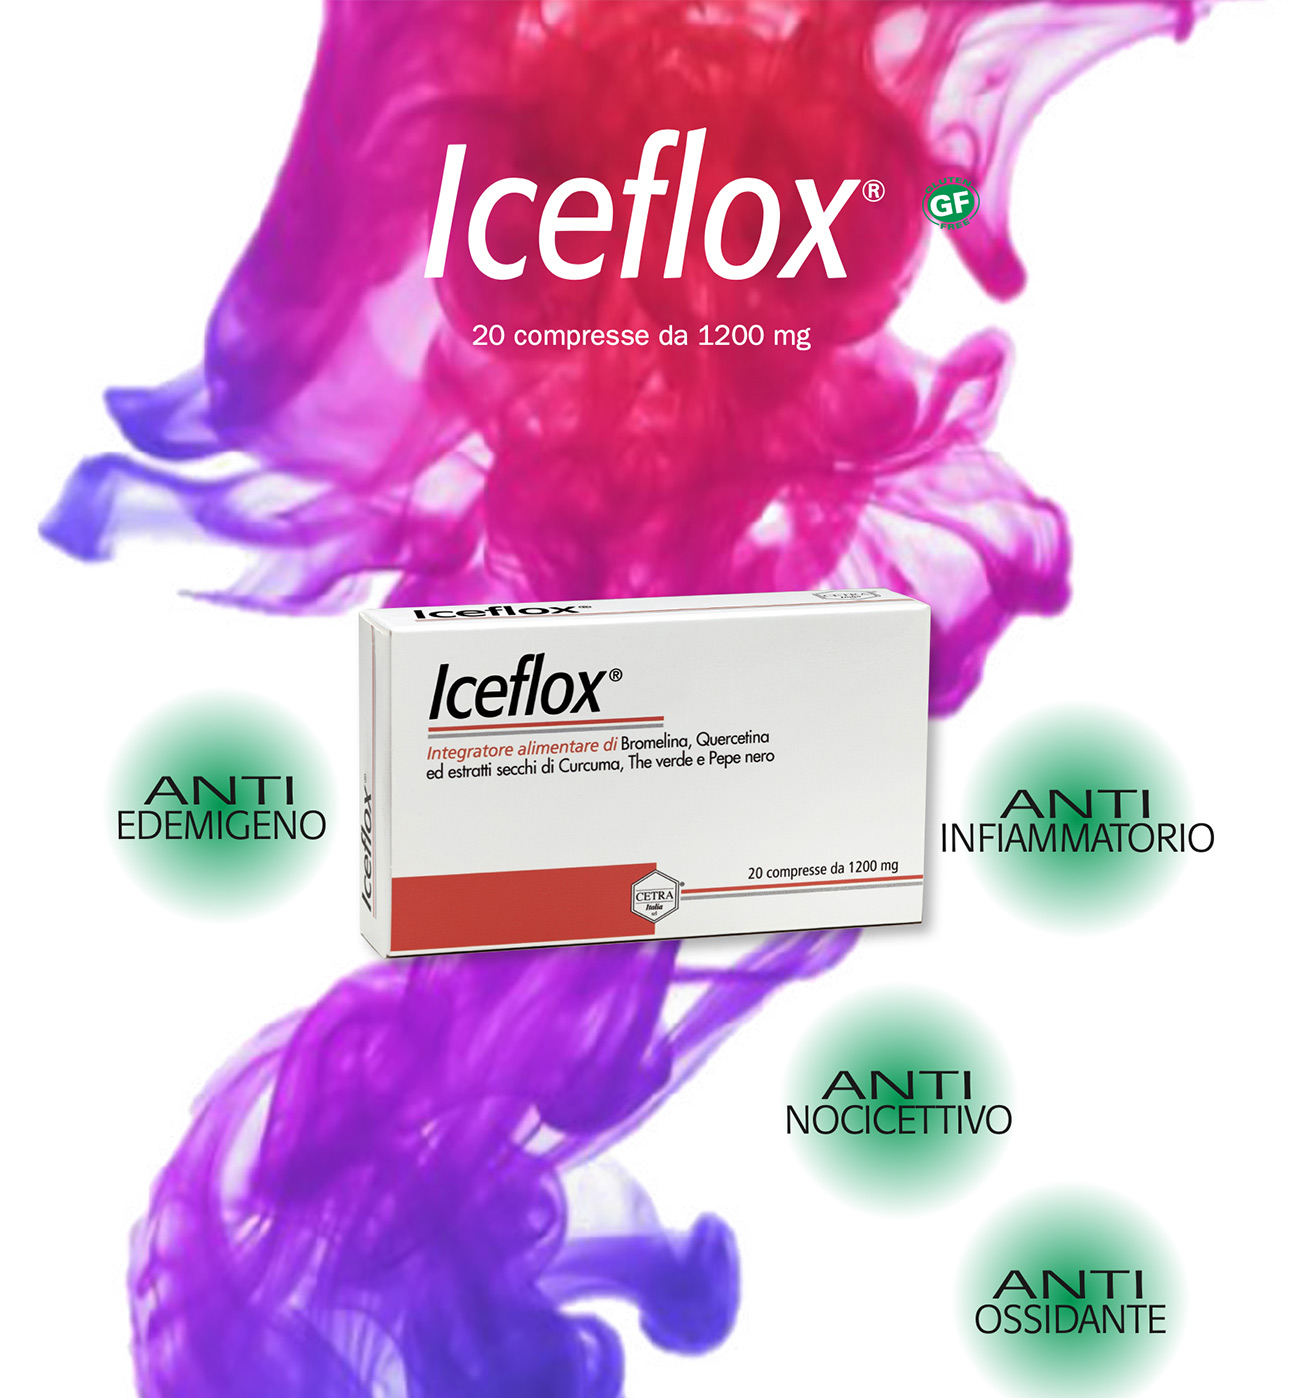 Iceflox